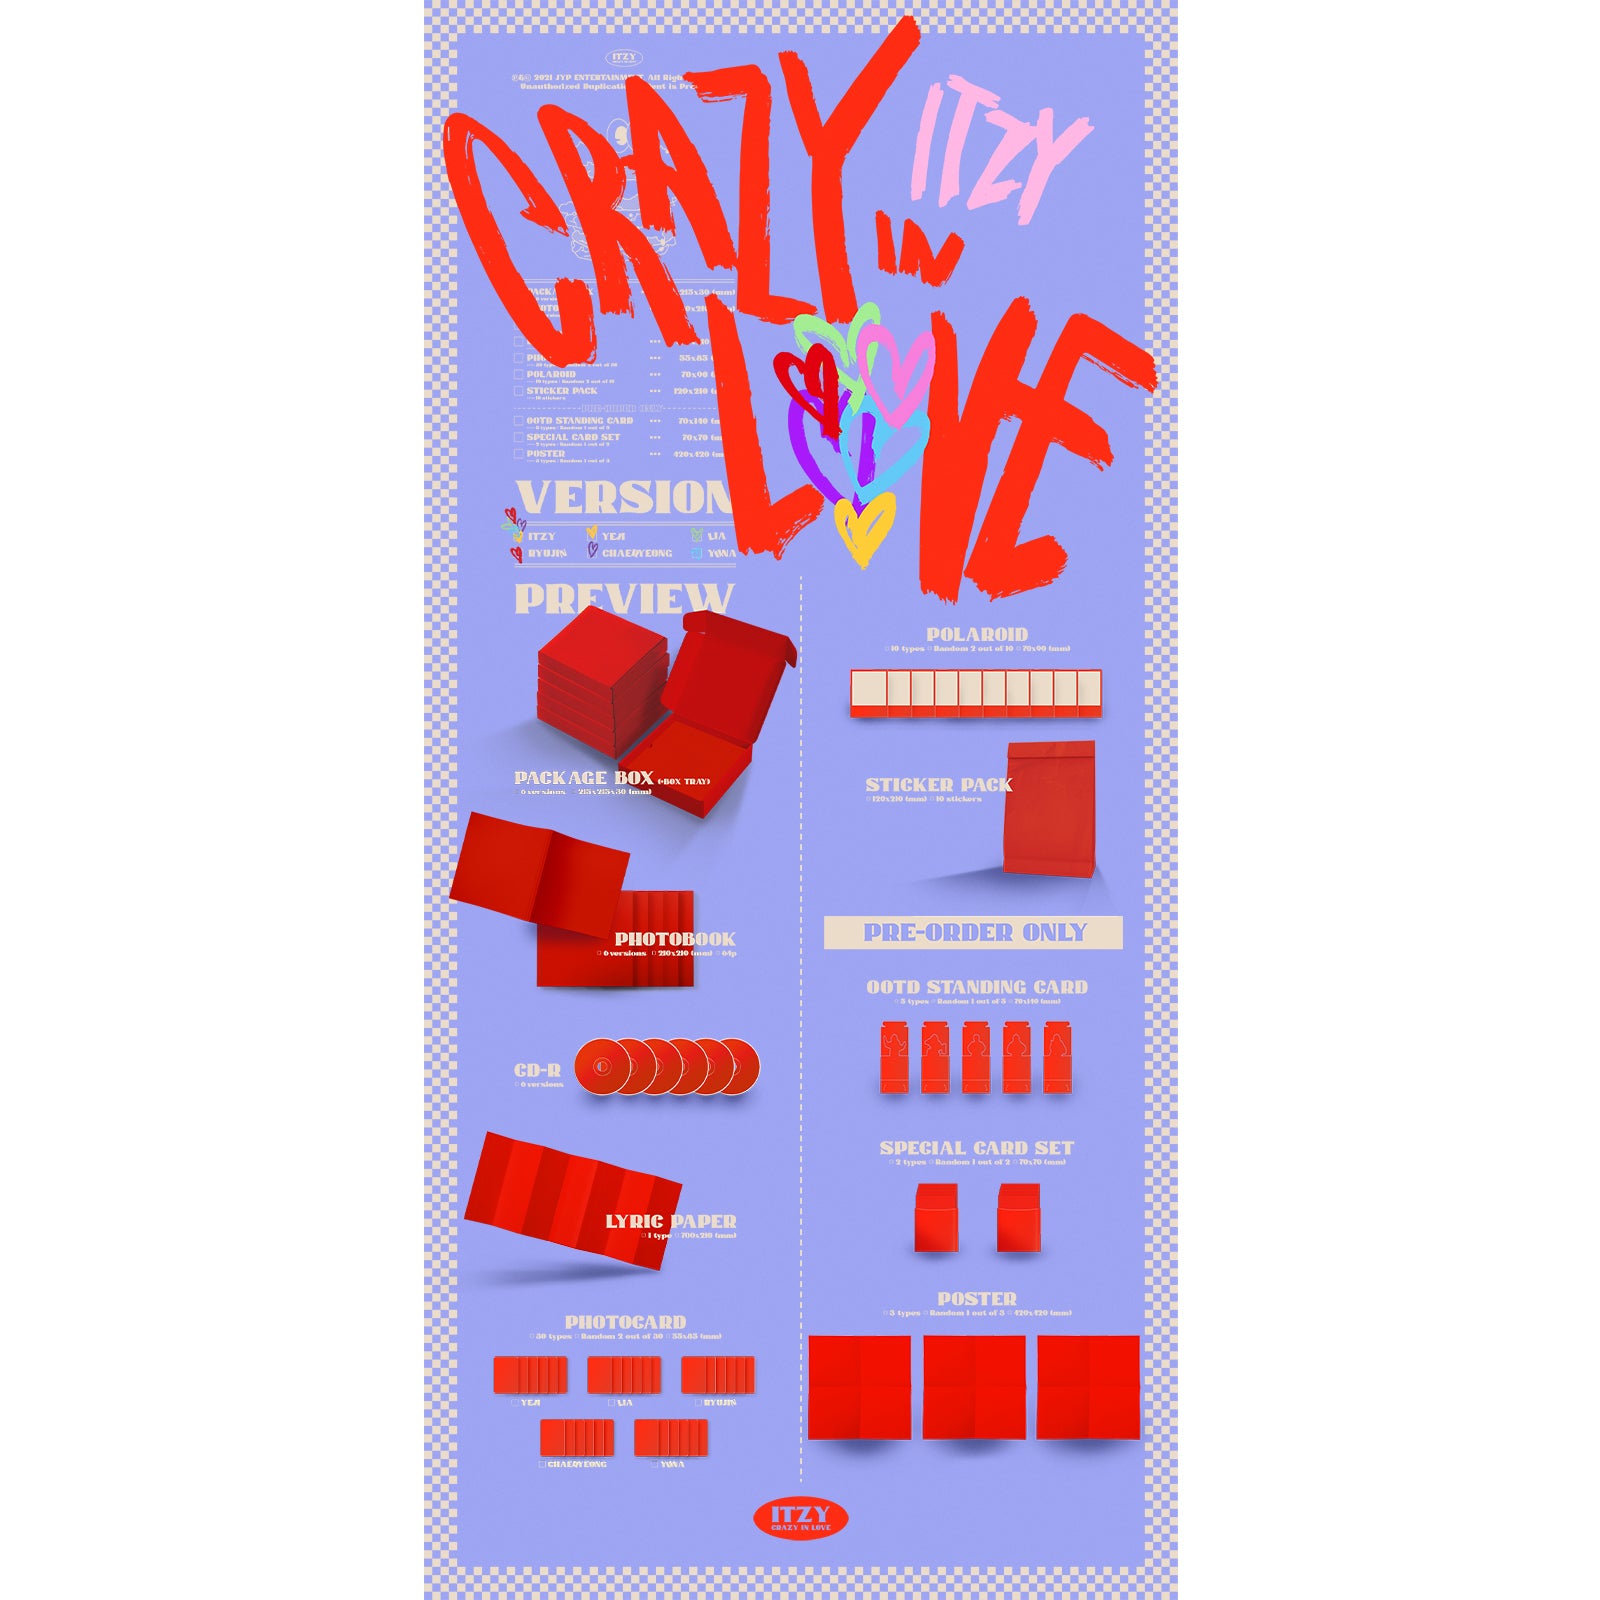 CRAZY IN LOVE – ワーナーミュージック・ストア